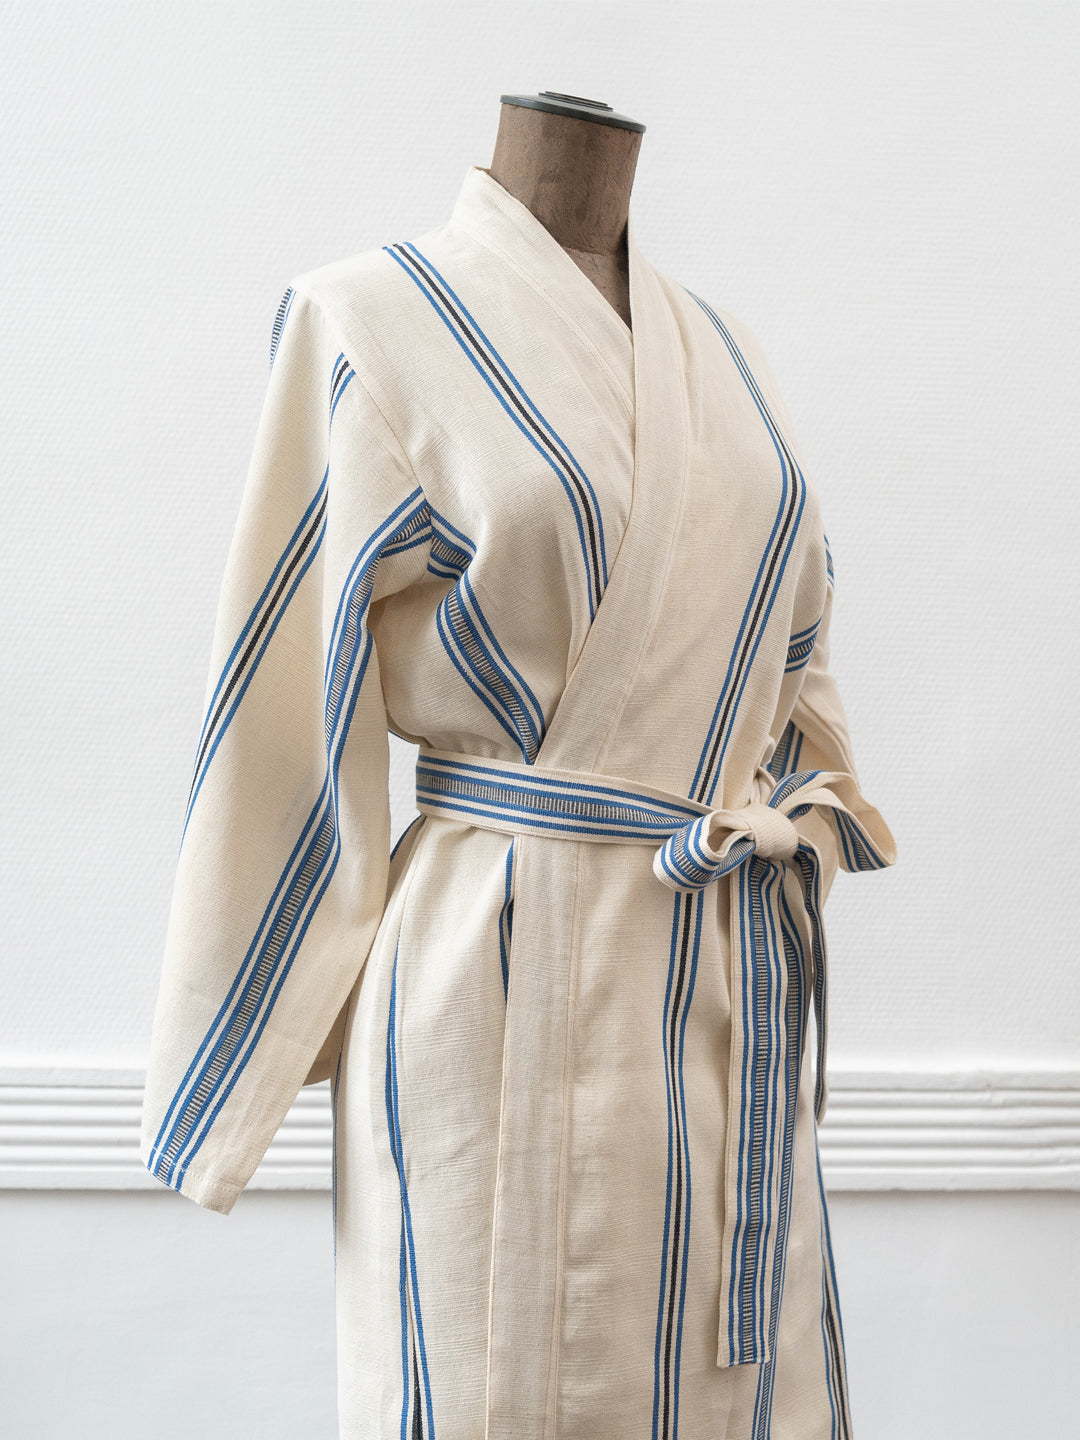 Kimono Tensira 100% coton, la teint main à